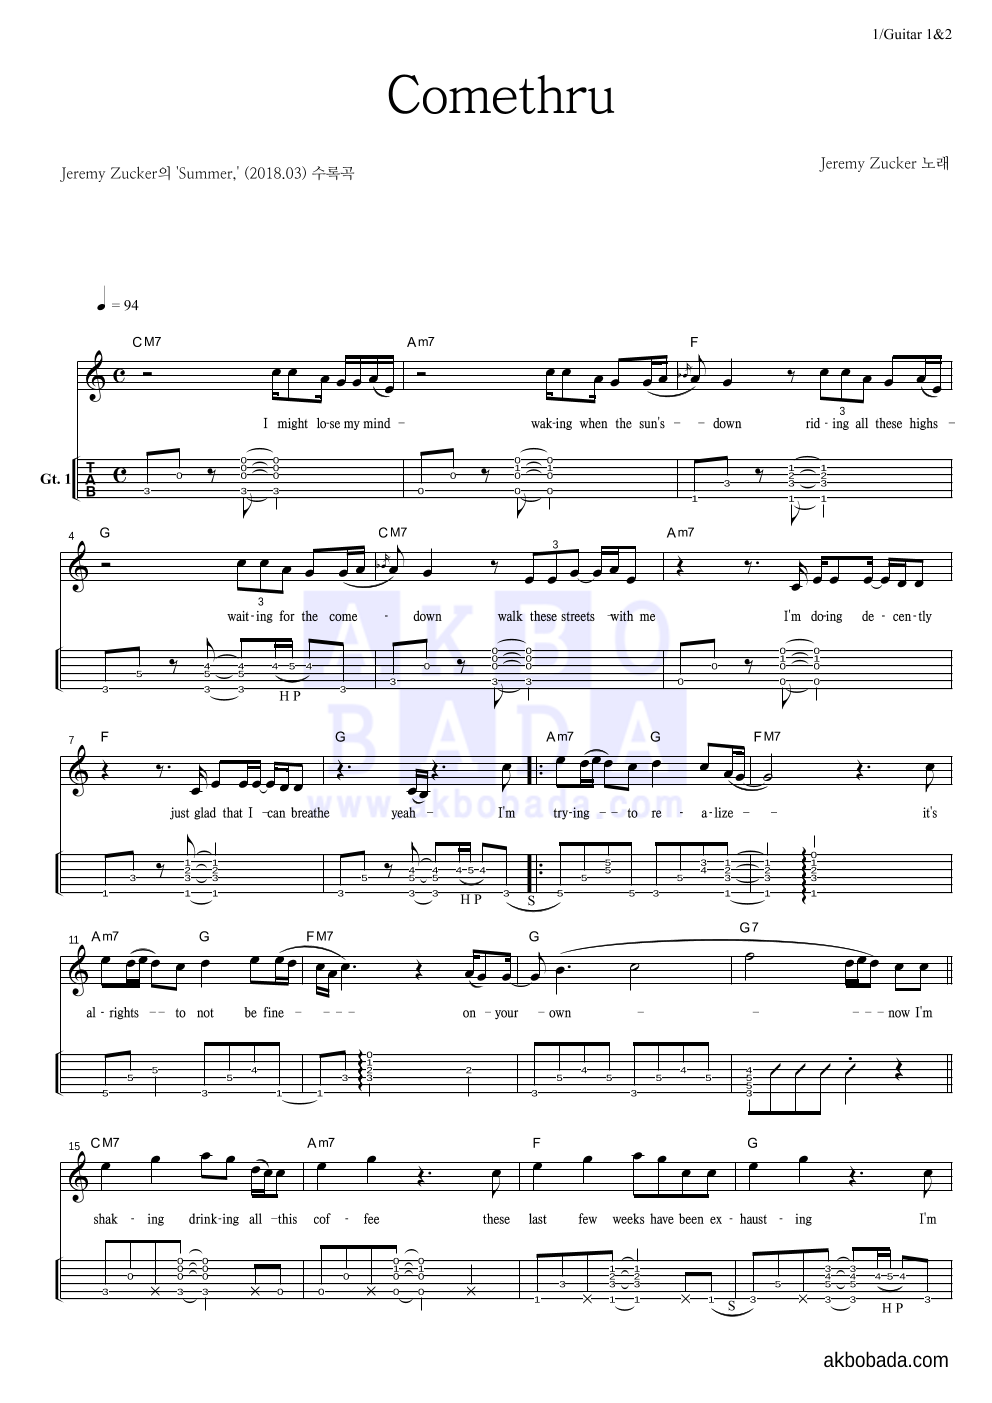 Jeremy Zucker - Comethru 기타(Tab) 악보 